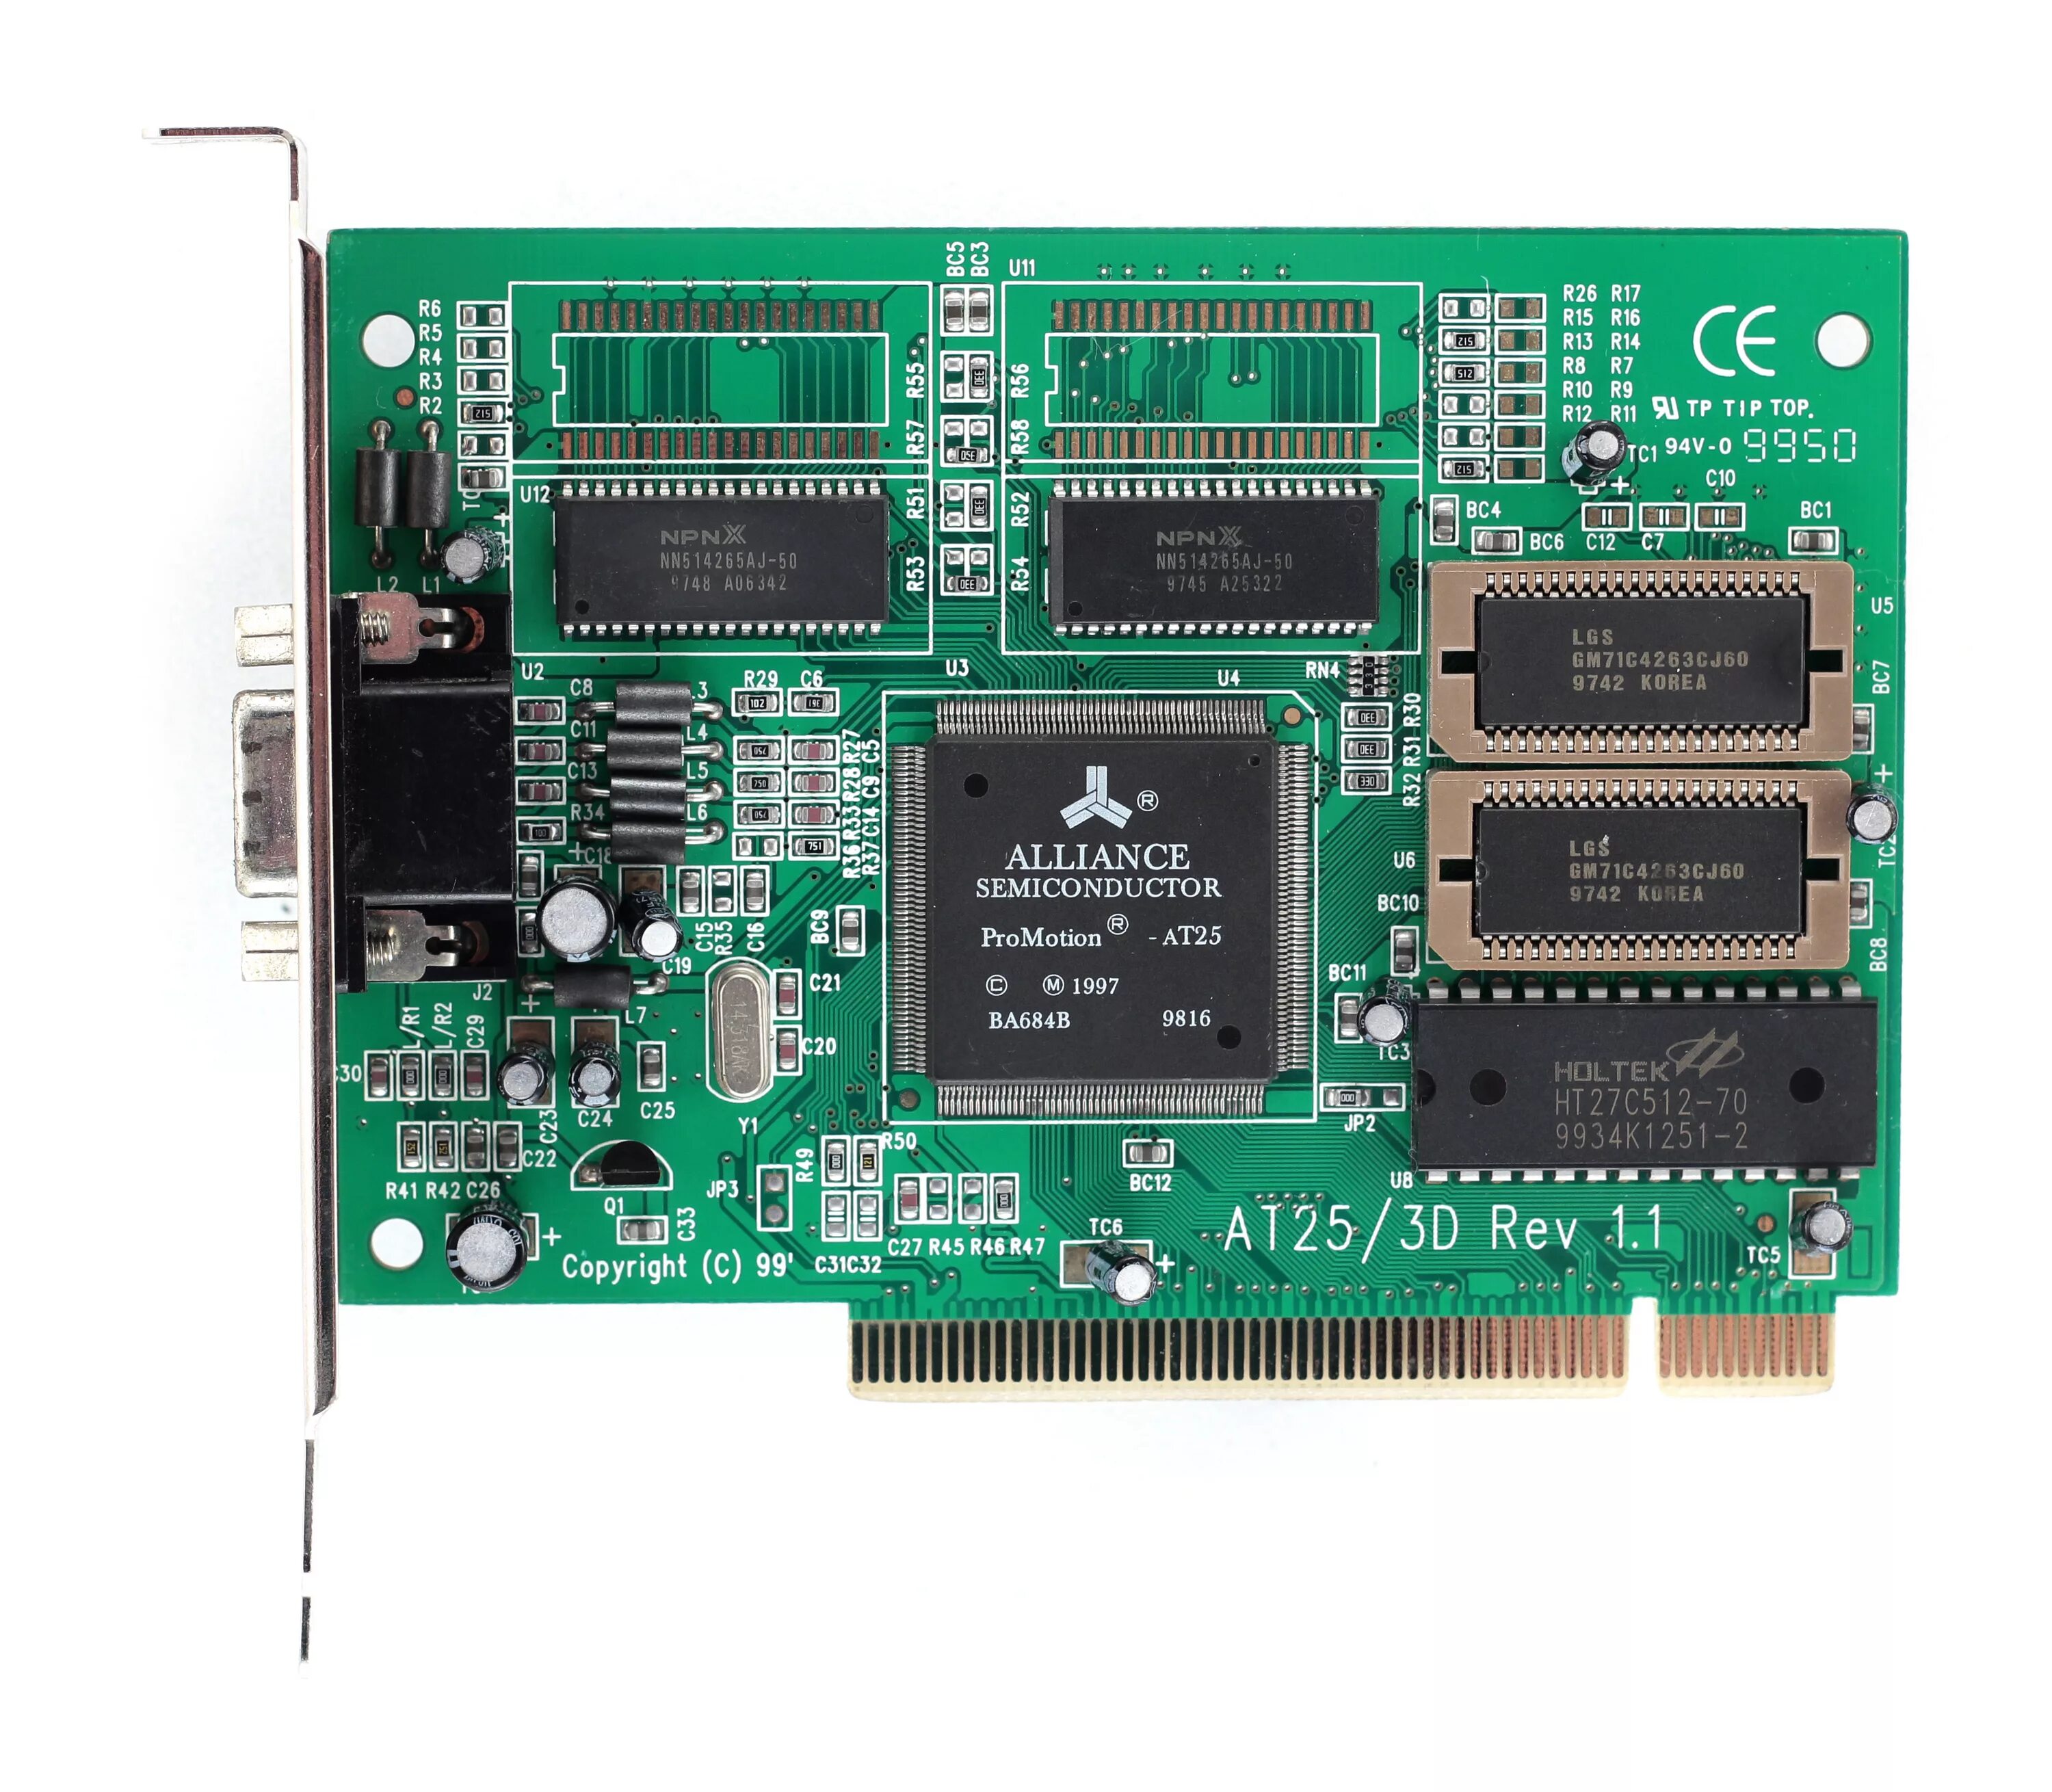 C 71 5. Графический процессор Alliance at-25. NVIDIA FX 5200. FX 5200 видеокарта 128. Gm71c4403cj.